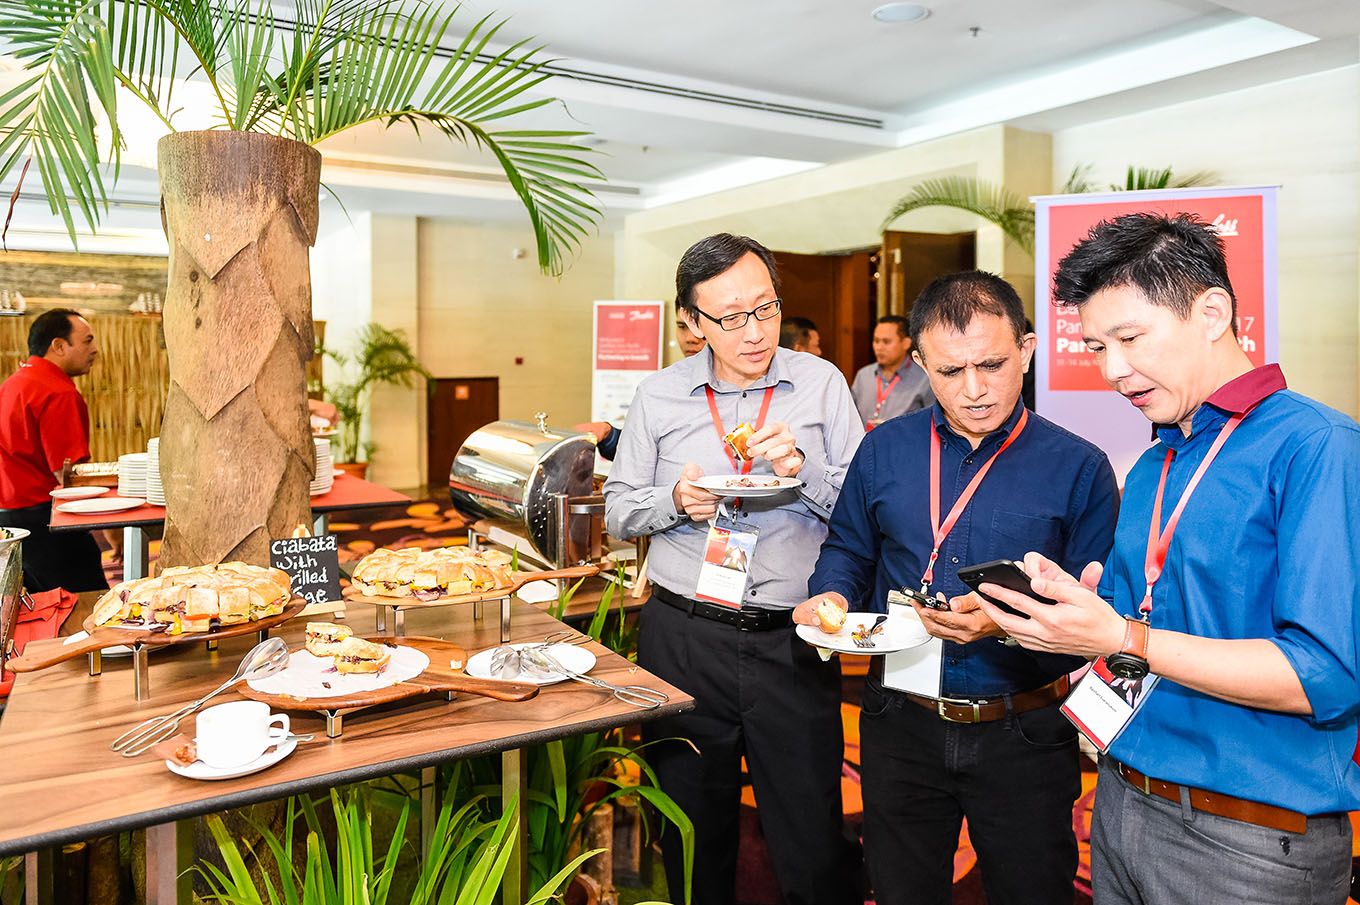 Define International - Danfoss Asia Pacific Partner Conference 2017